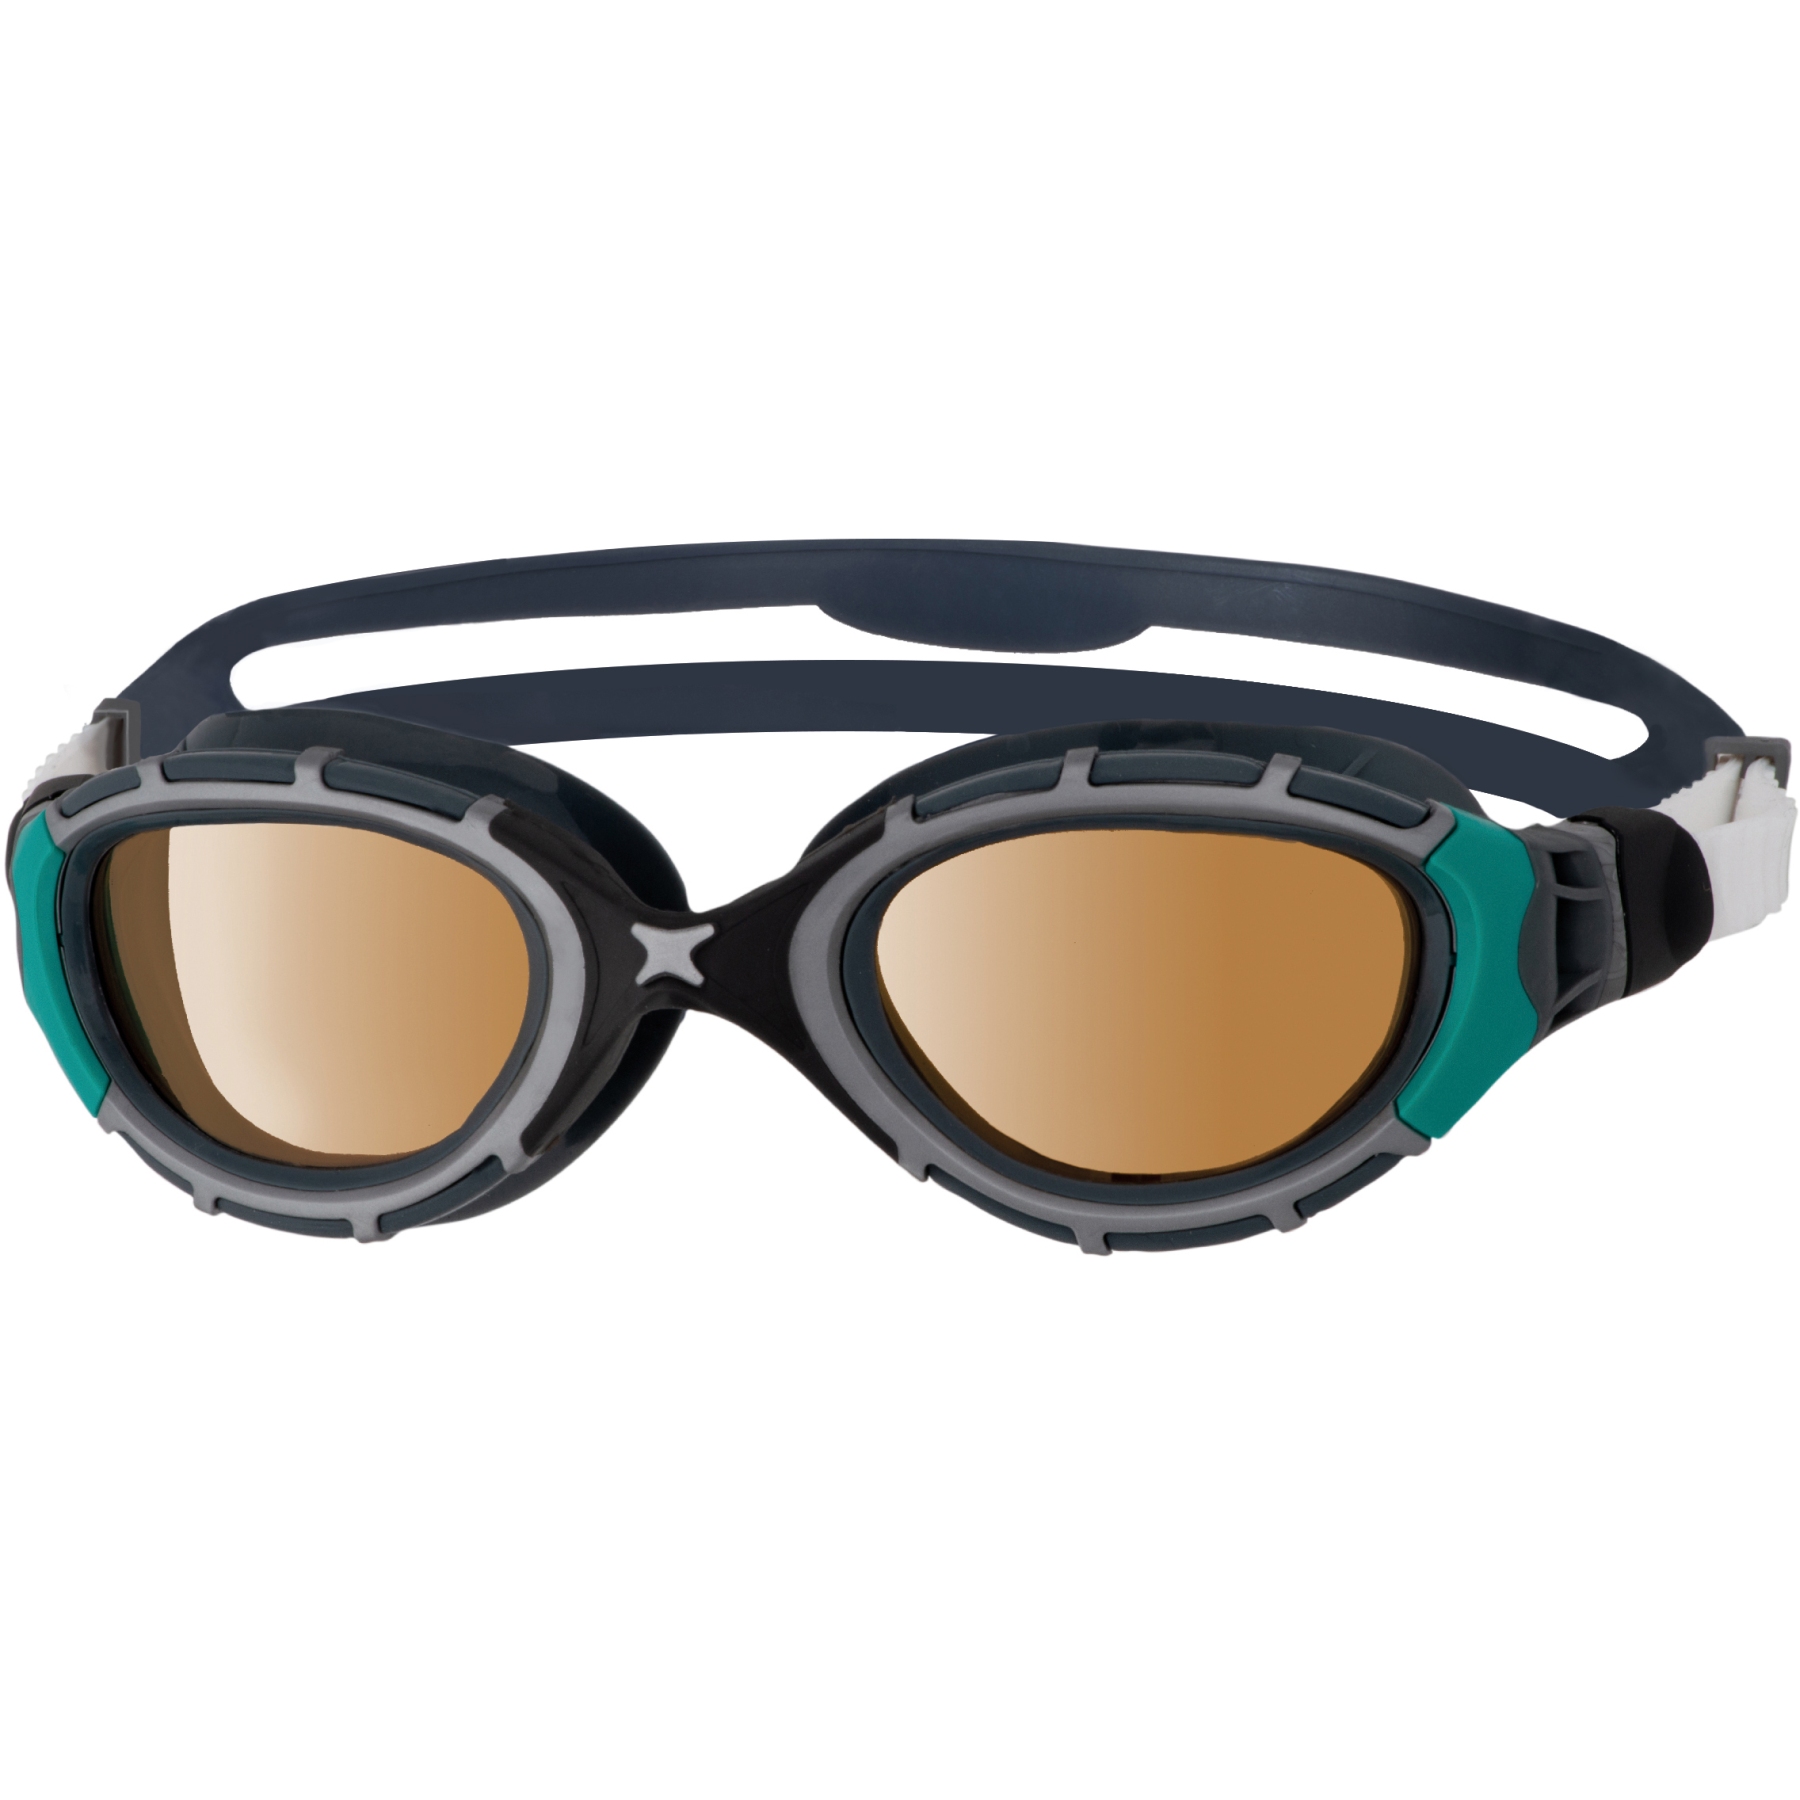 Productfoto van Zoggs Predator Flex Swimming Goggles - Polarized Ultra Copper Lenses - Regular Fit - Black/Green